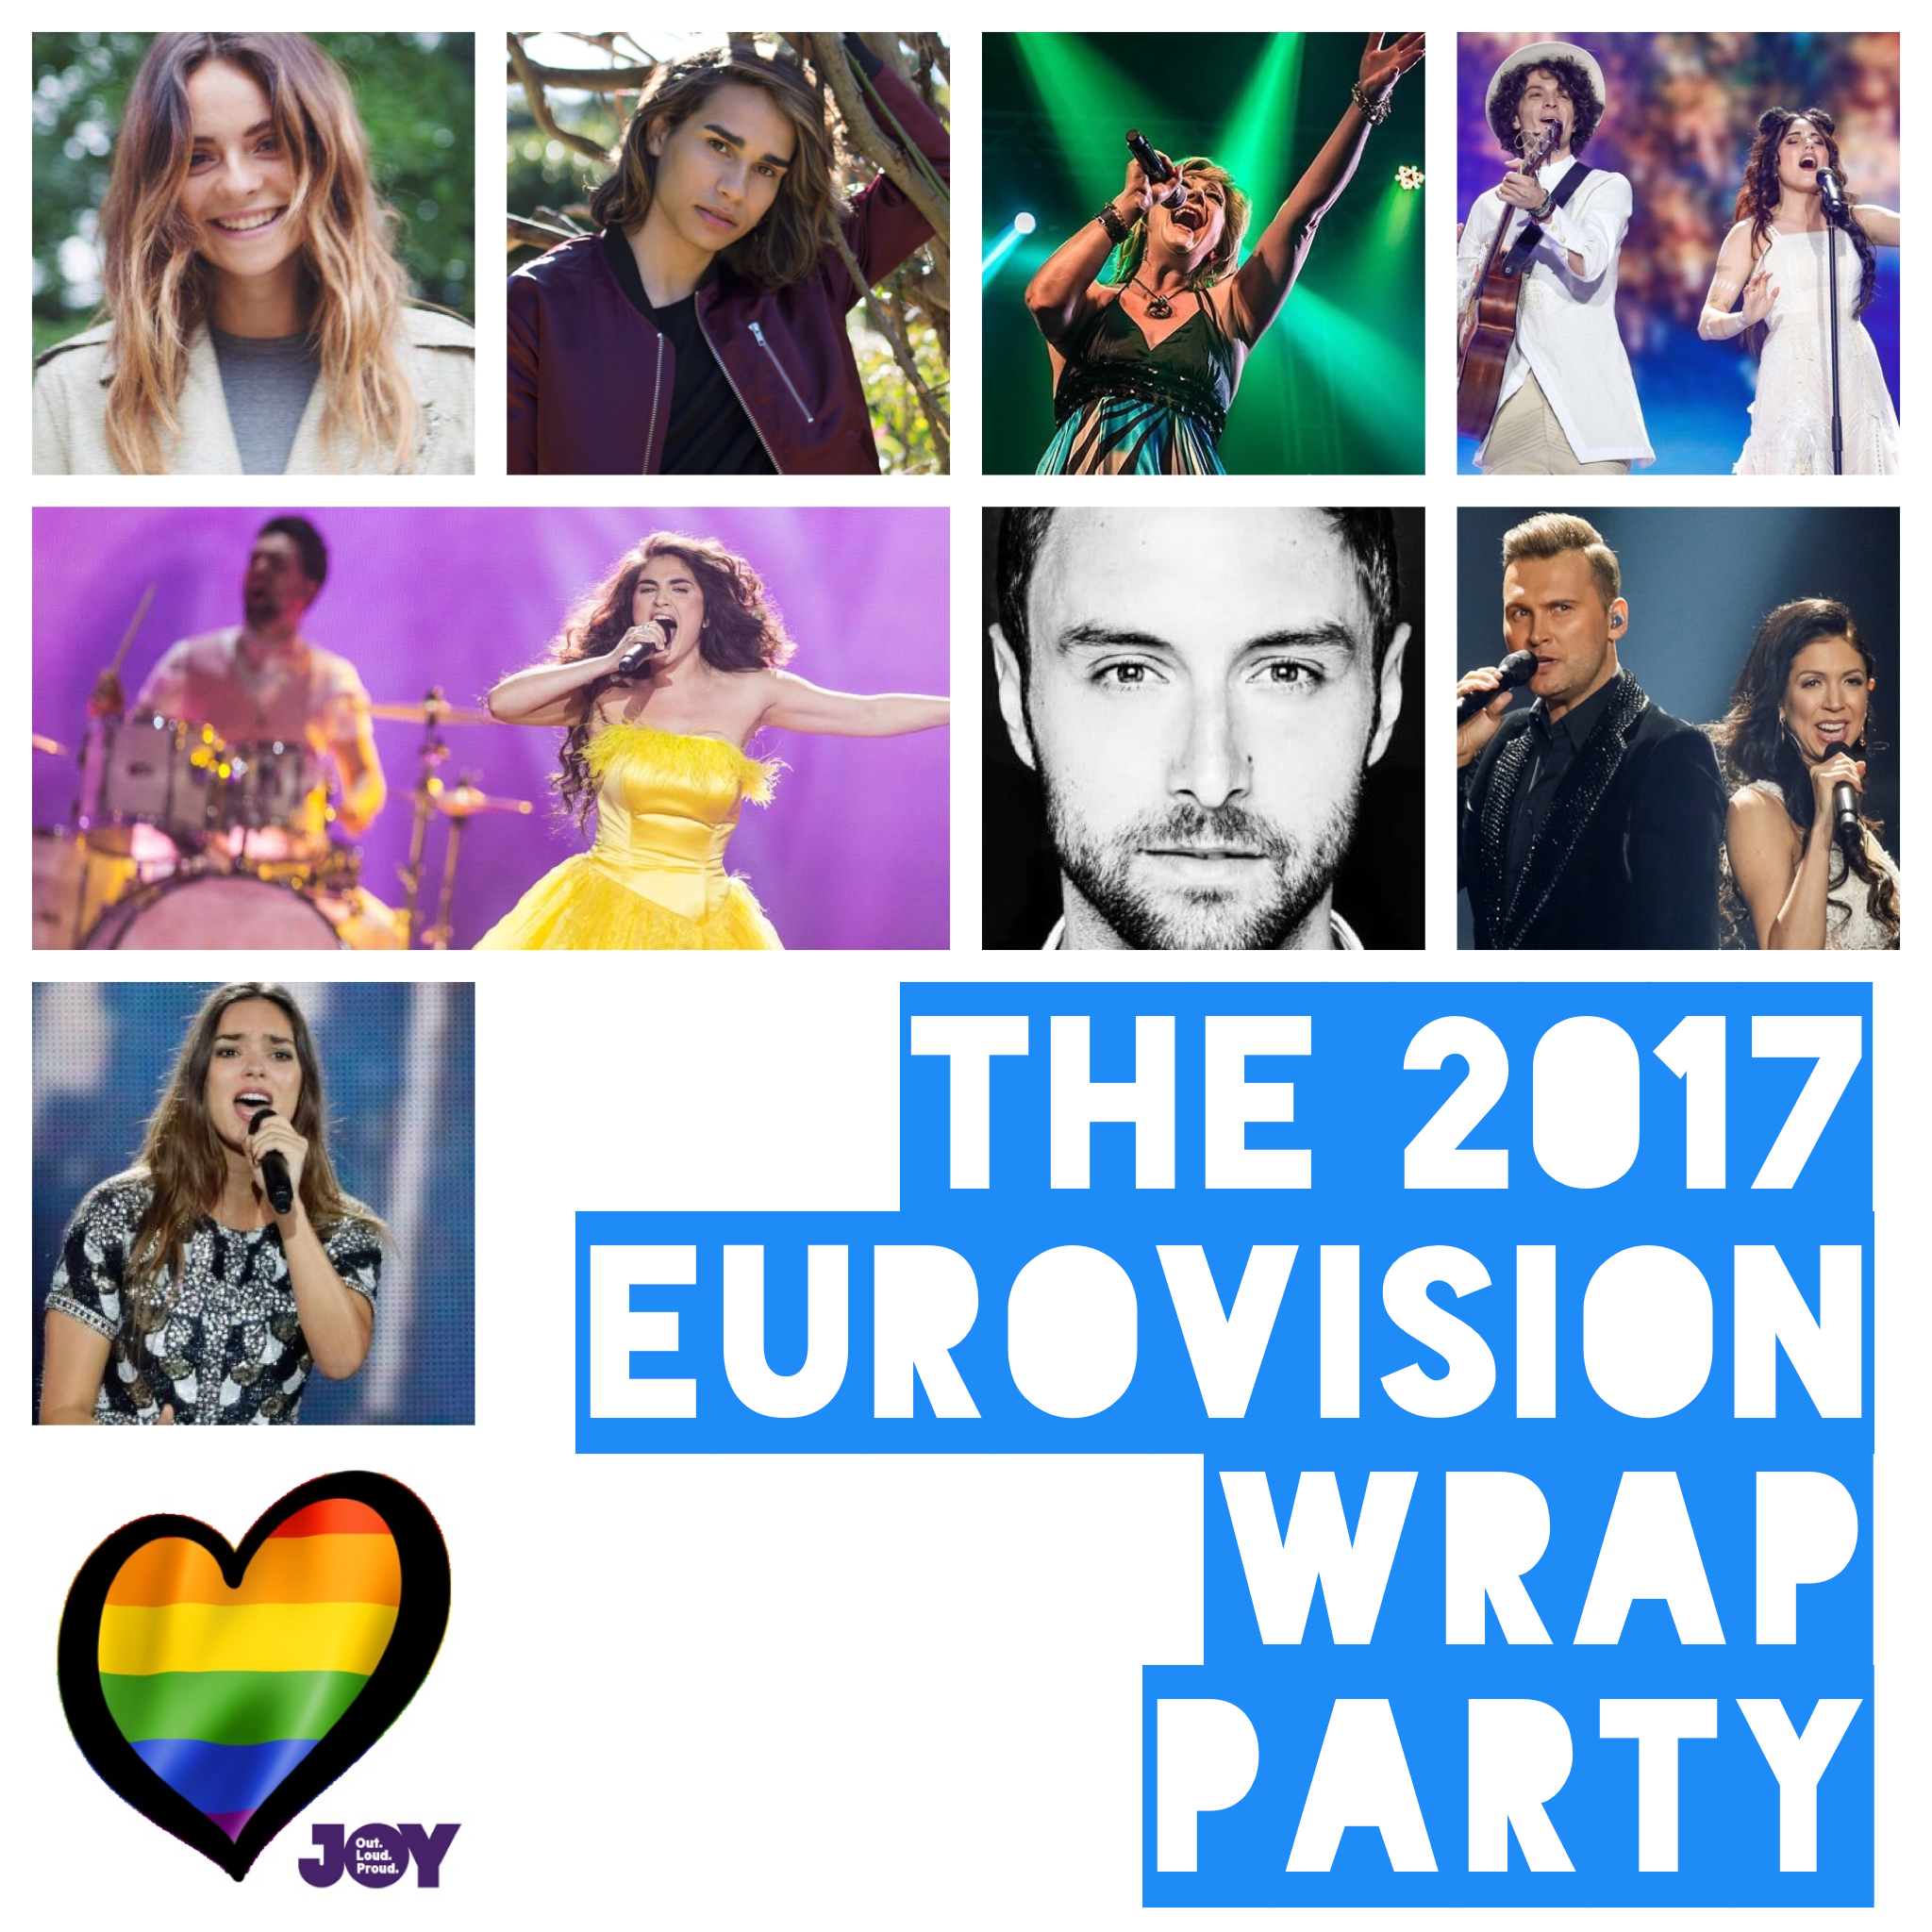 The 2017 Eurovision Wrap Party